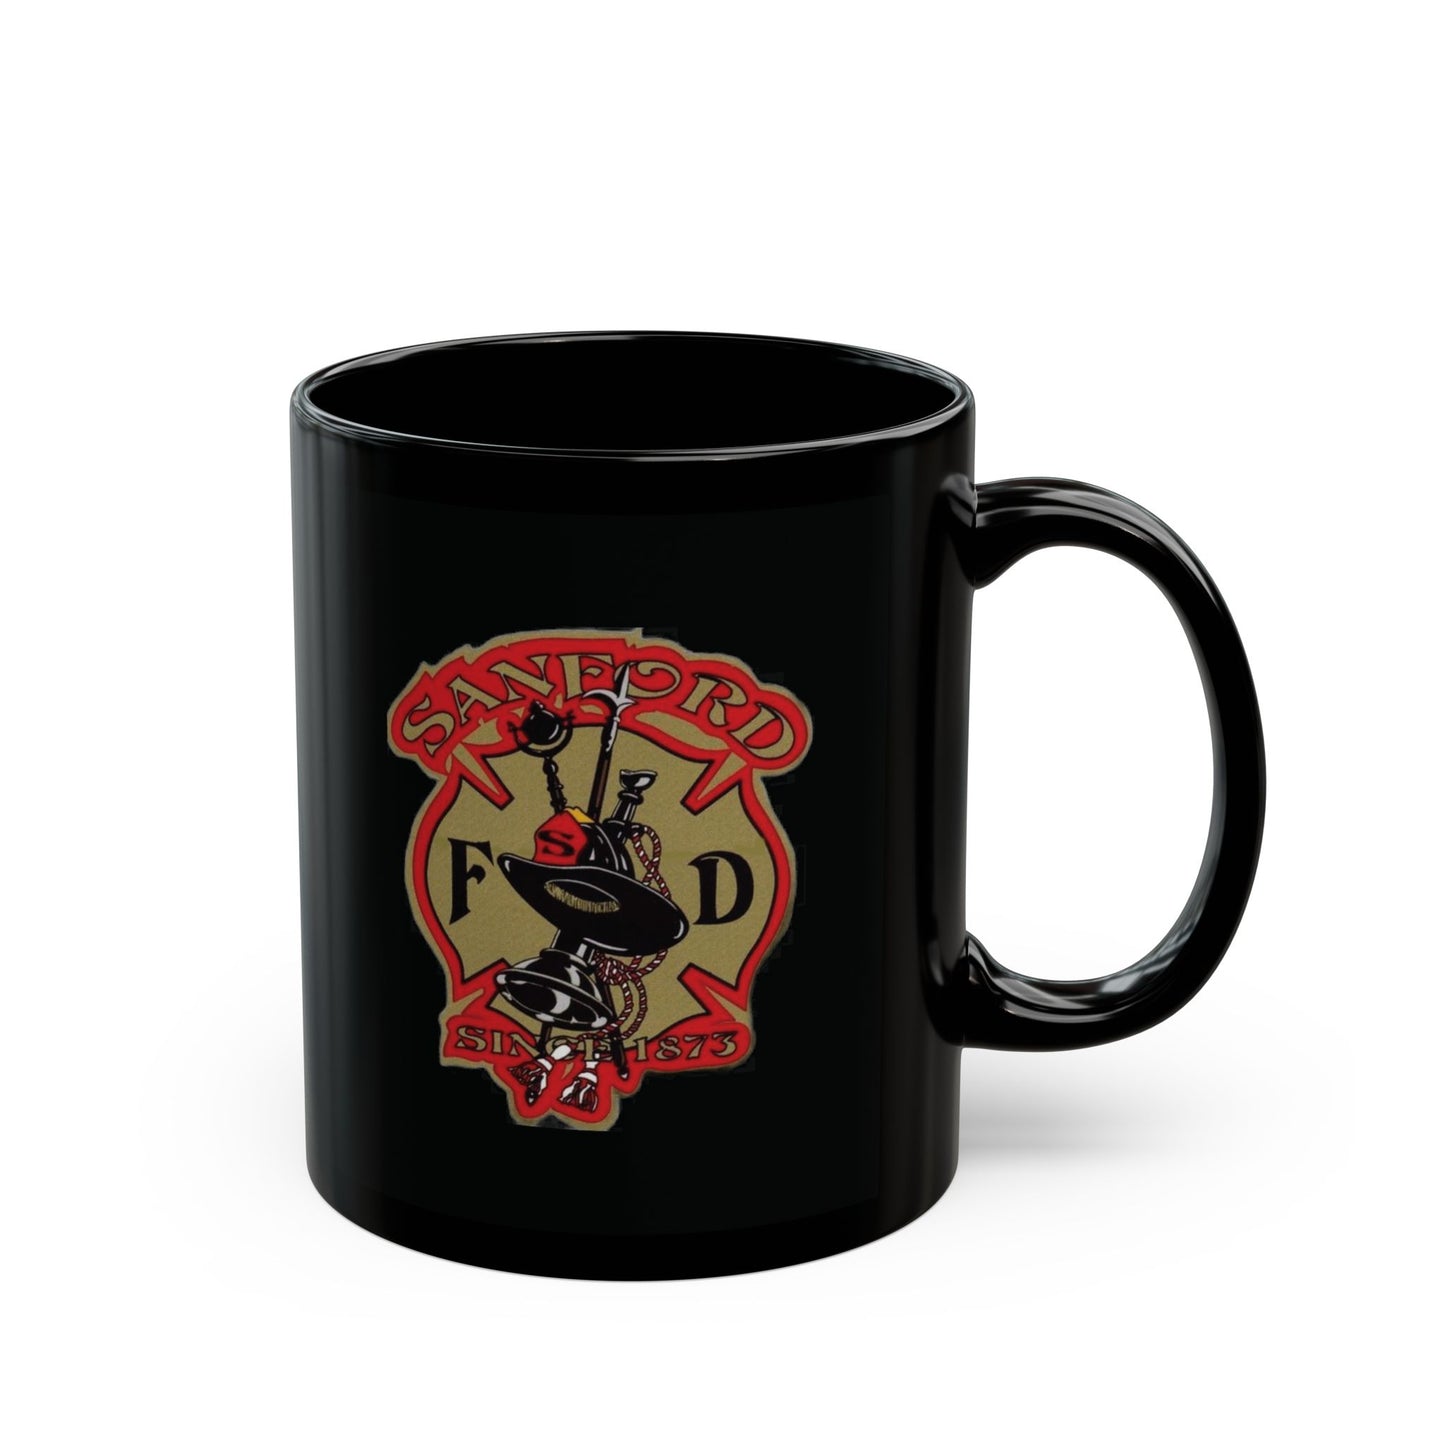 Sanford Fire Department Logo Ceramic Mug 11oz